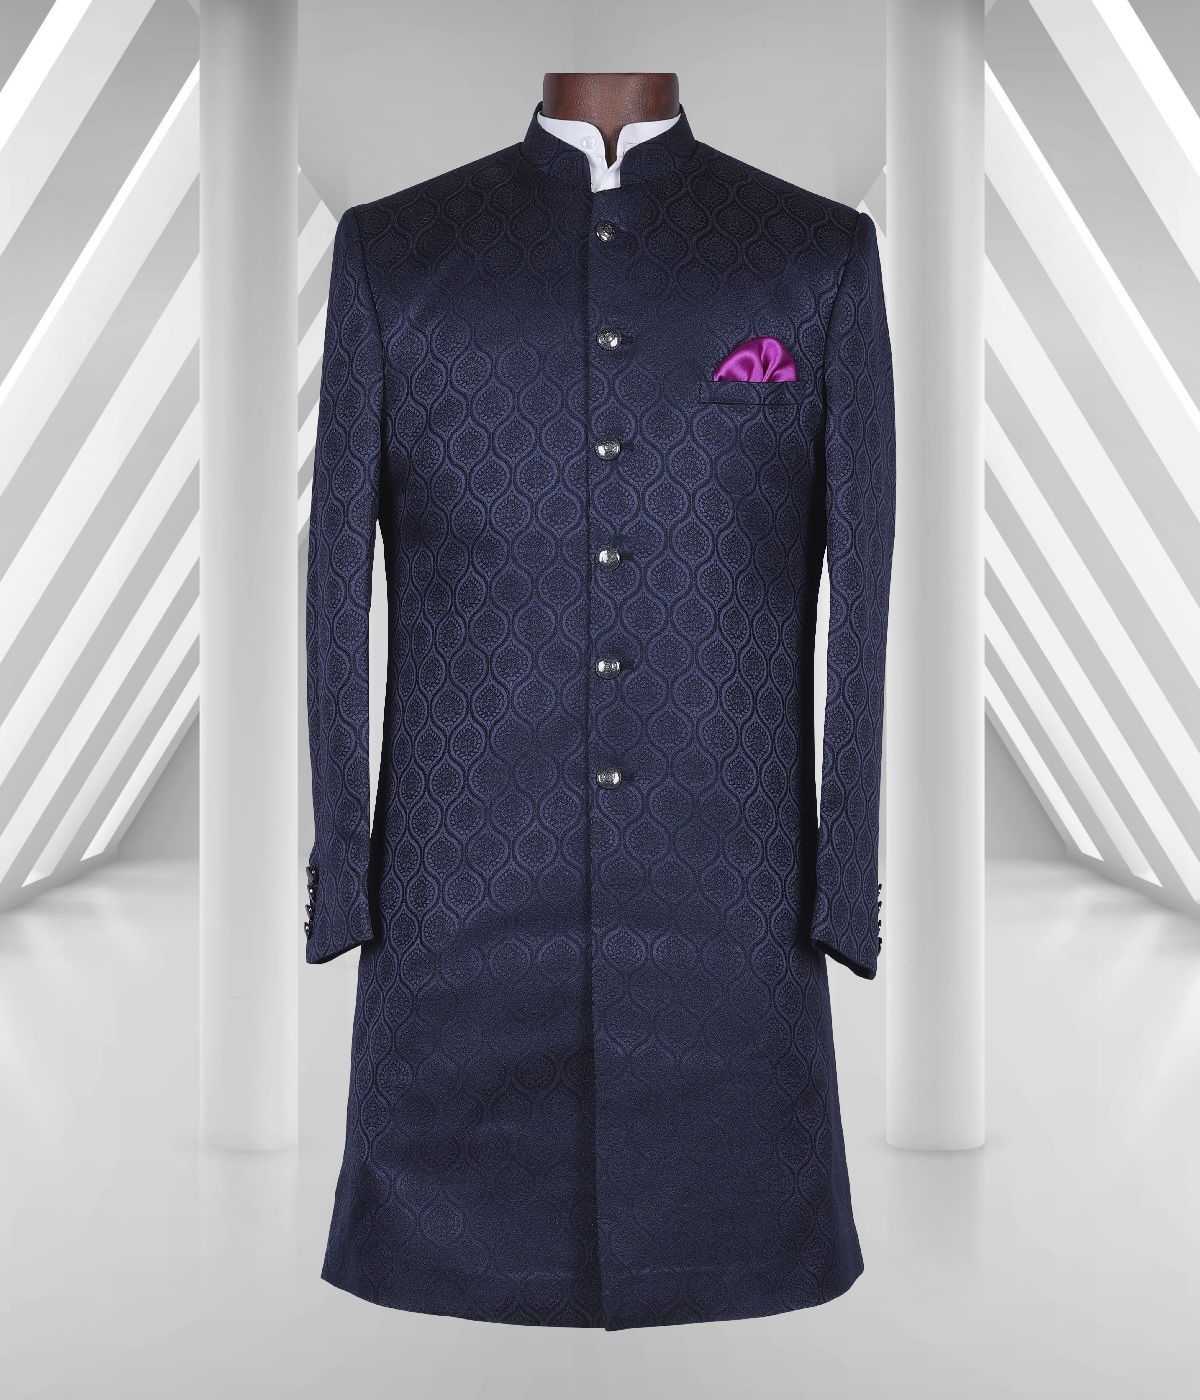 Blue Colored Jacquard Textured Men's Achkan Suit